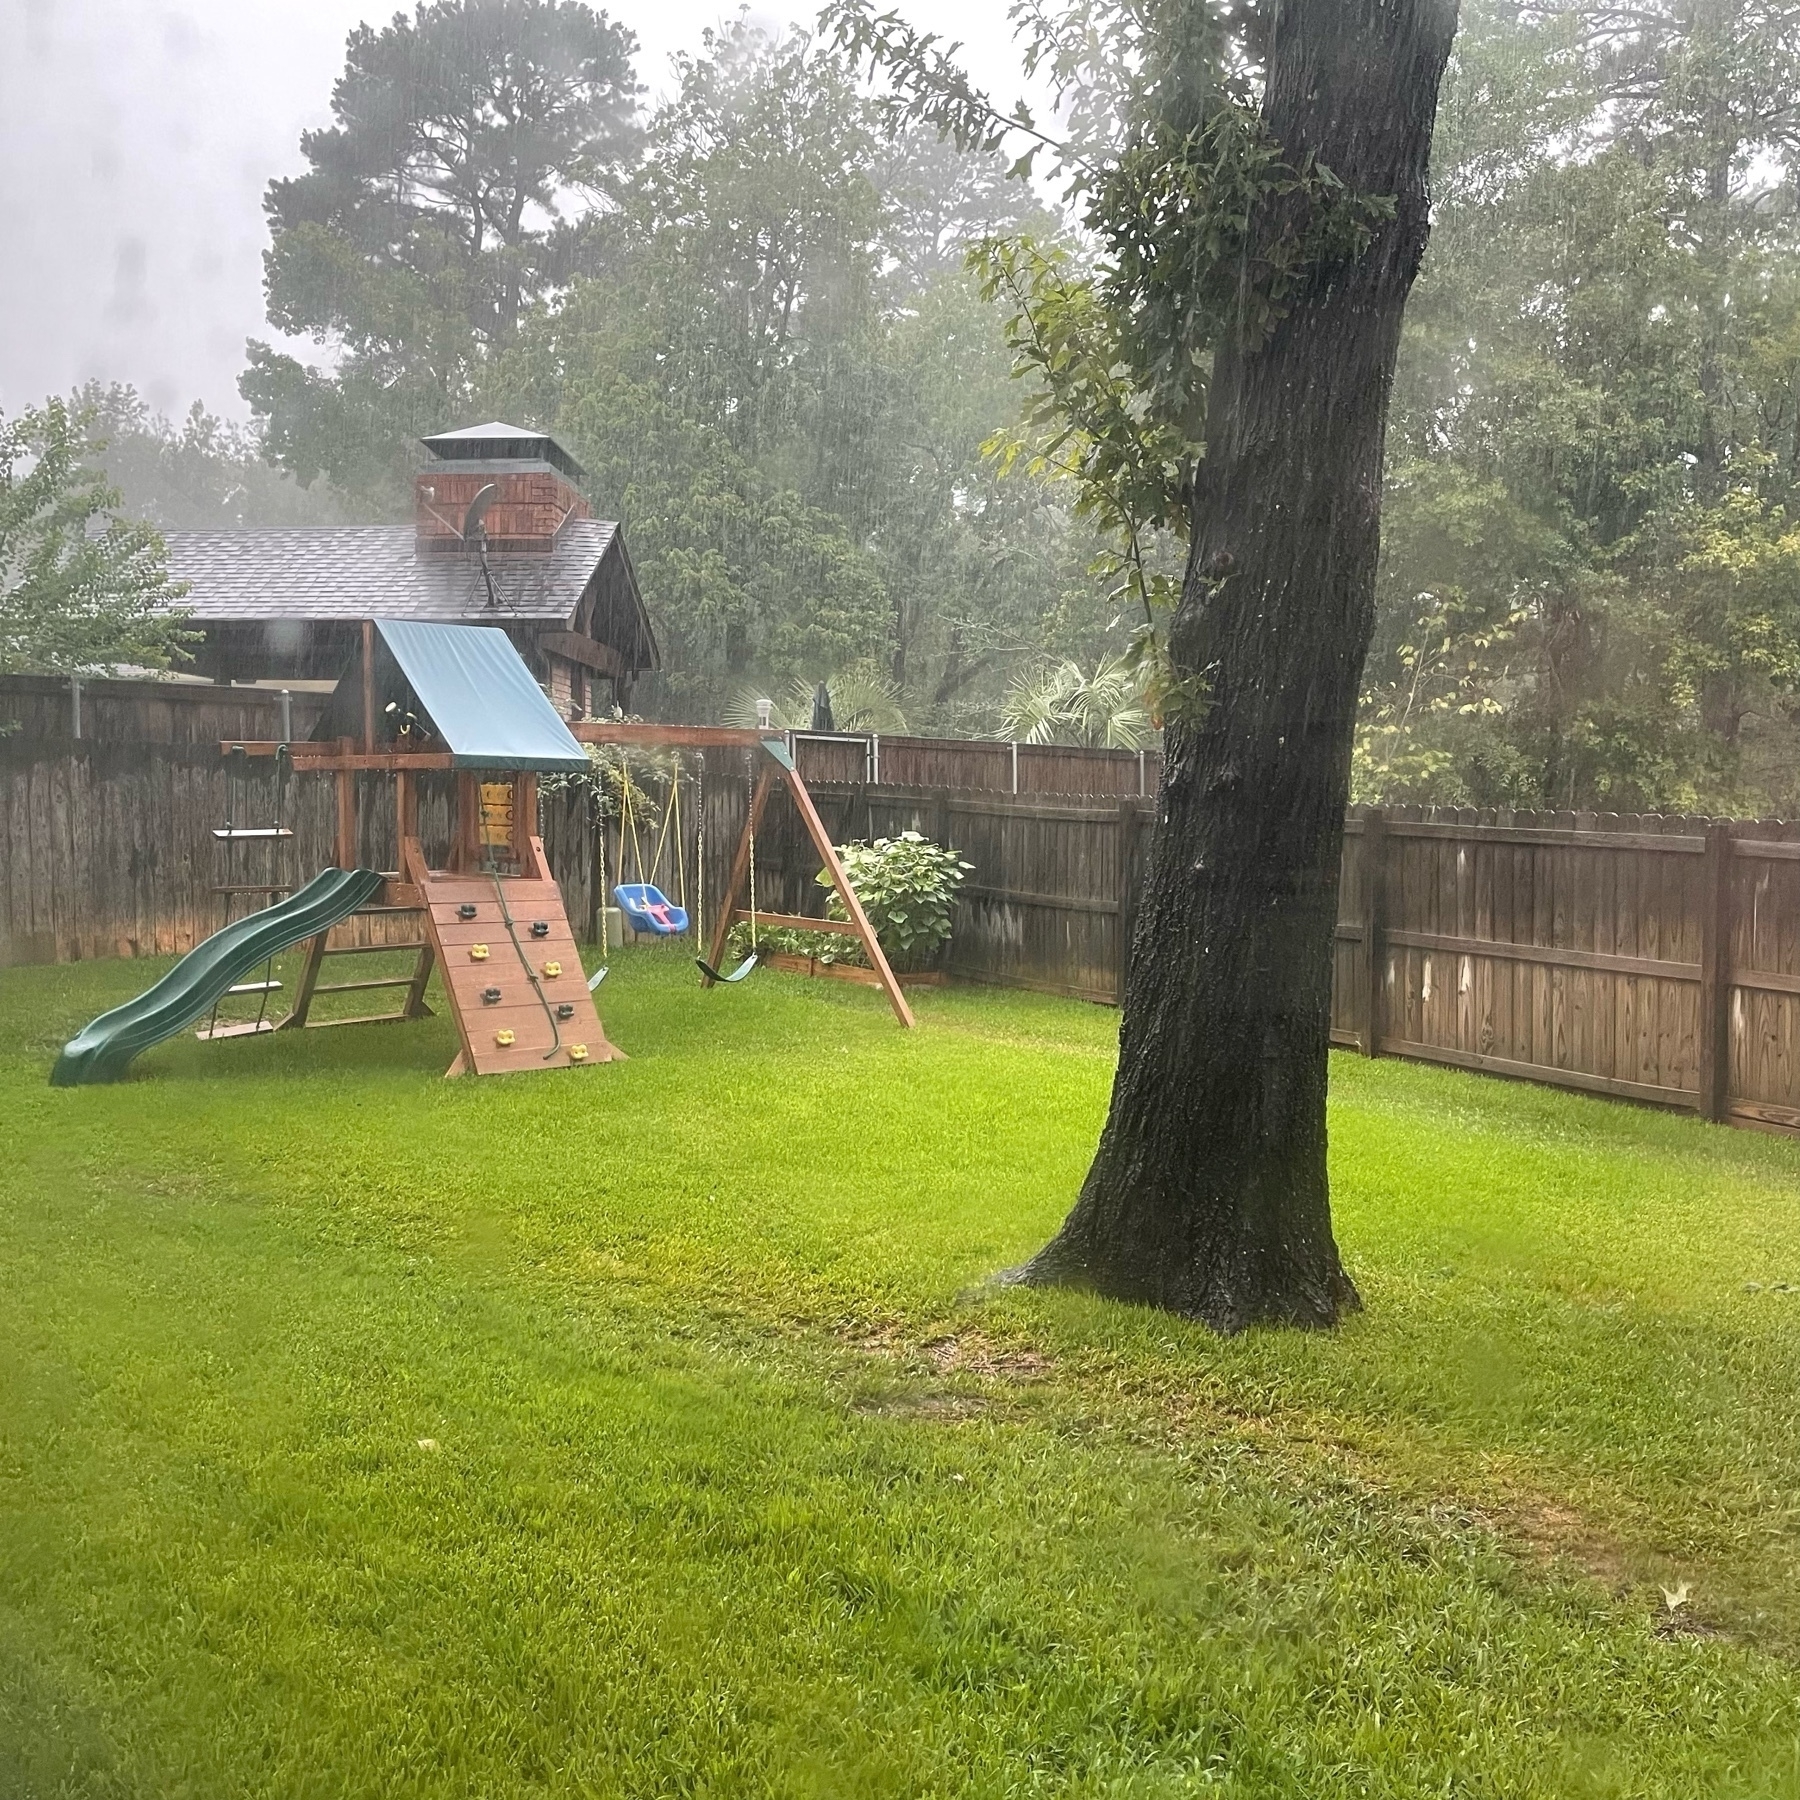 Rain on a backyard playset